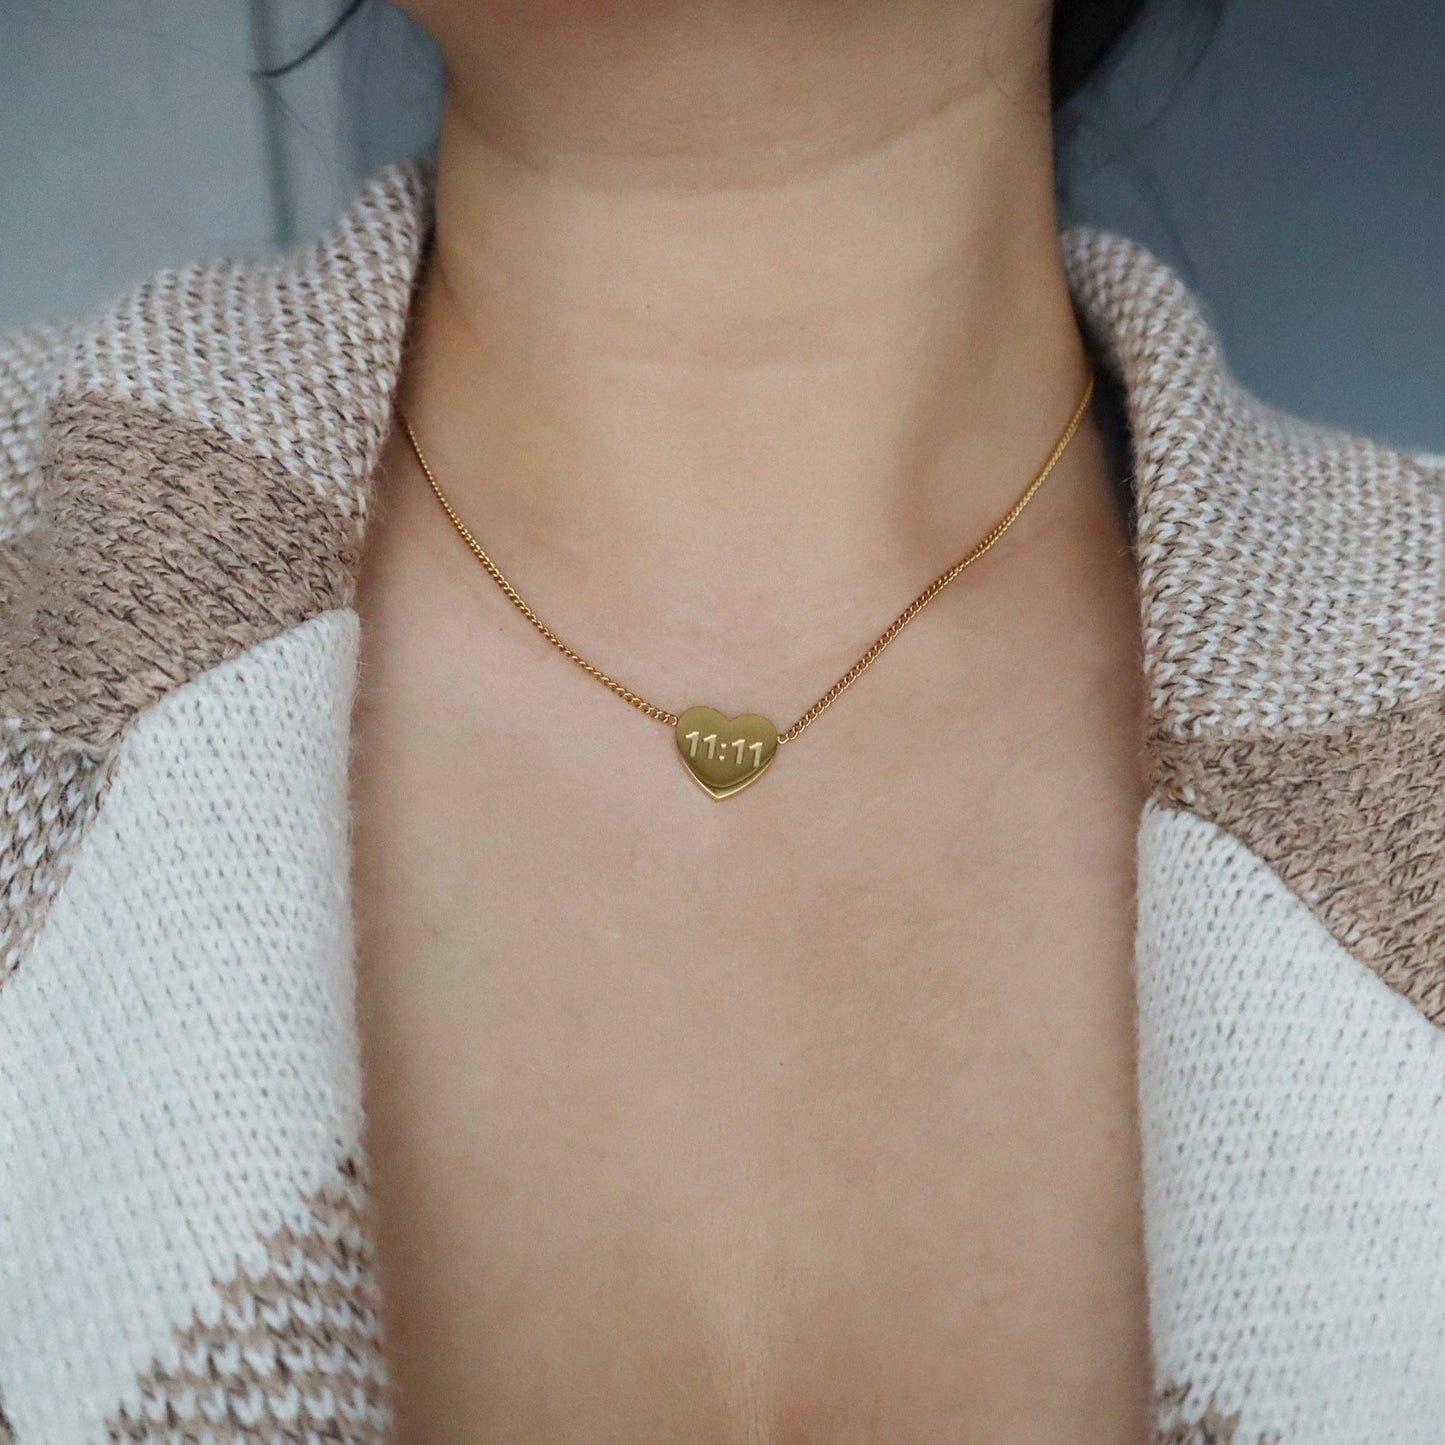 11:11 Heart Necklace ♡ Pendant Necklace